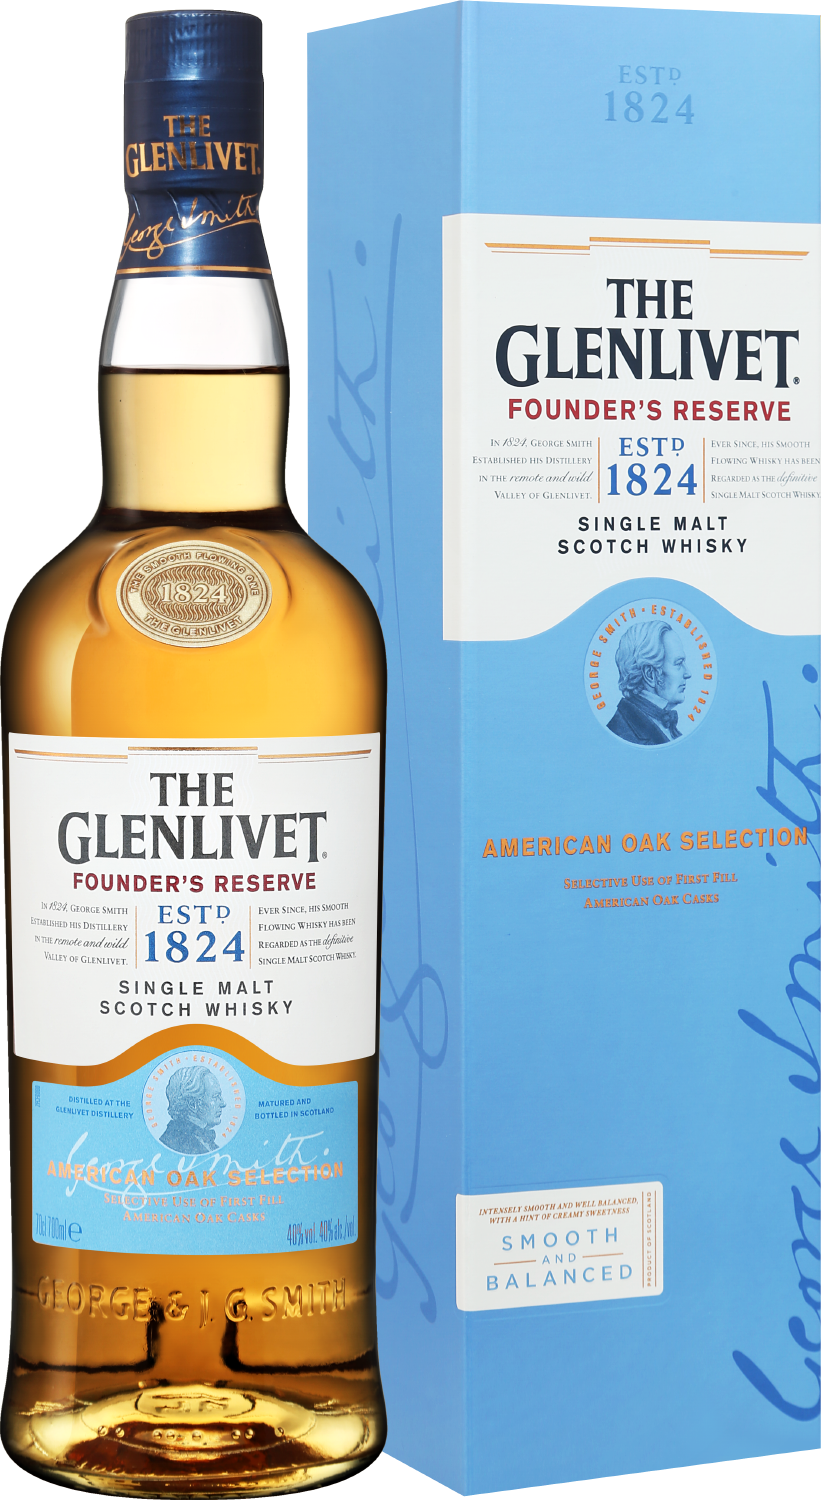 The Glenlivet Founder's Reserve Single Malt Scotch Whisky (gift box) game of thrones house tyrell clynelish reserve single malt scotch whisky gift box